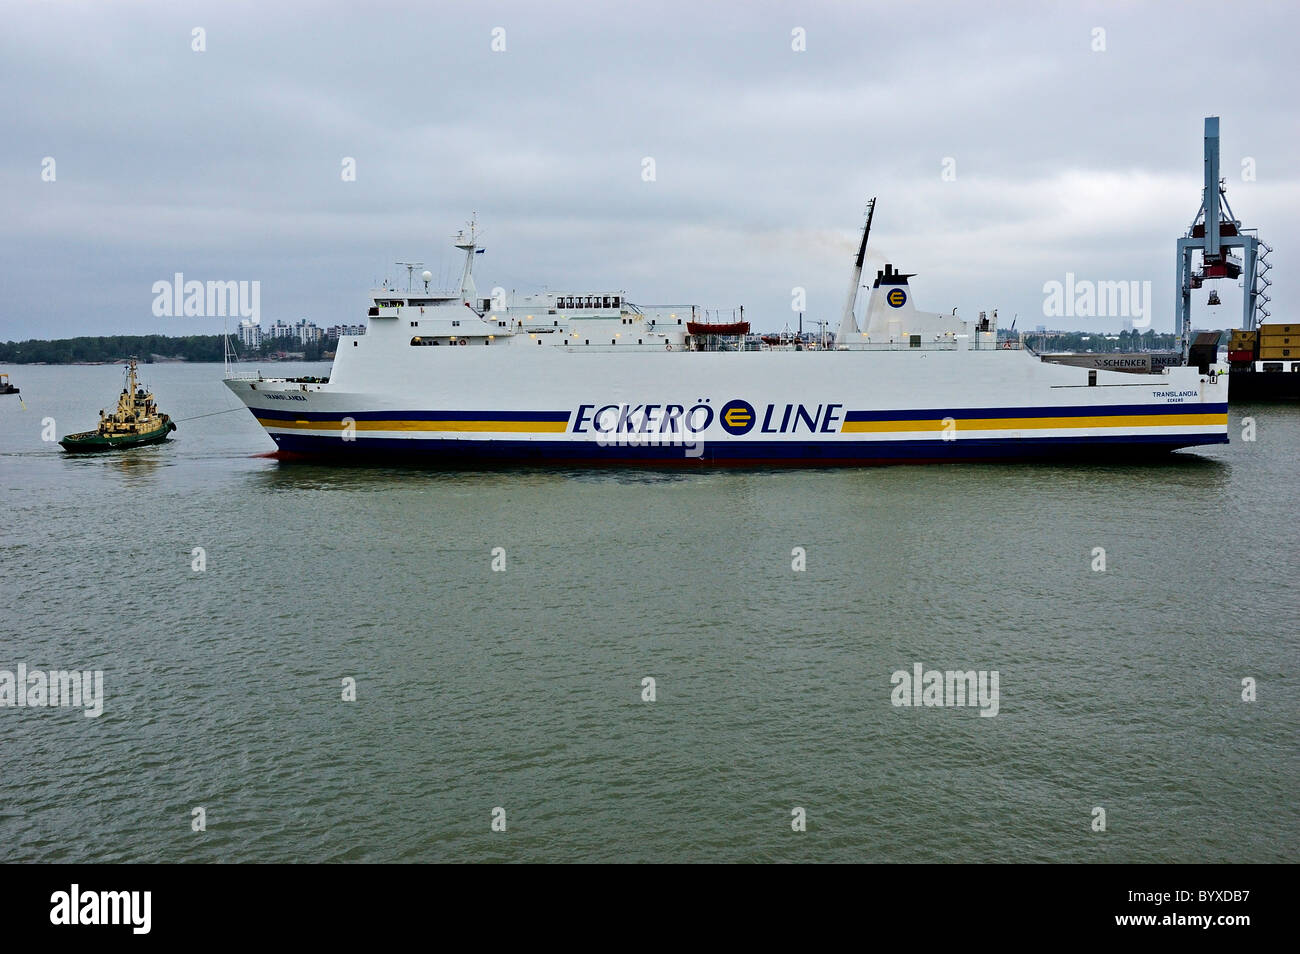 A tug guiding the Eckero ferry Translandia out of harbour towards the green coastline of Helsinki Stock Photo